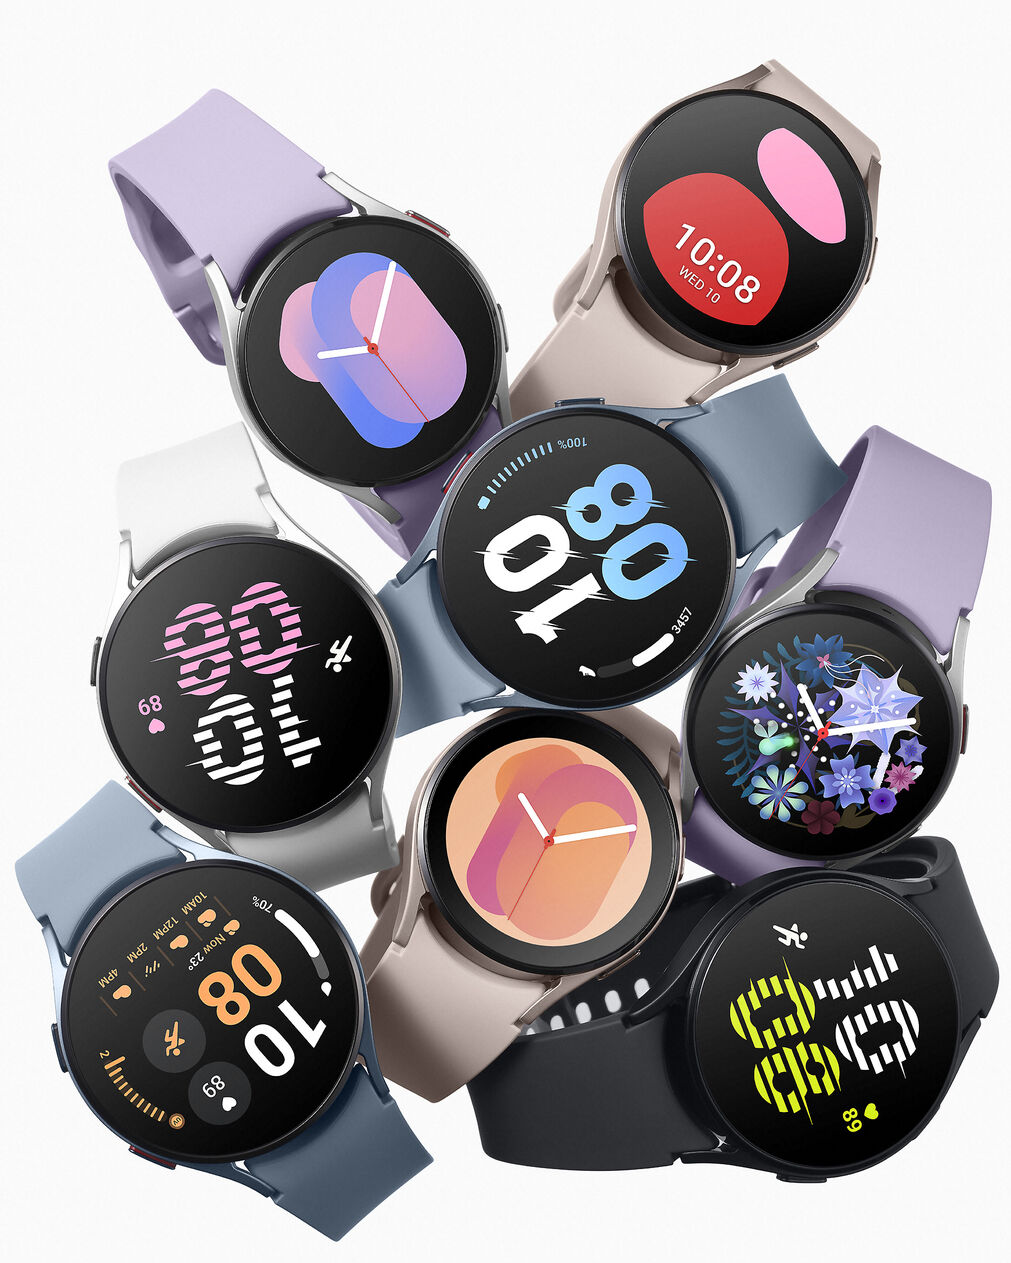 Reloj Samsung Galaxy Watch5